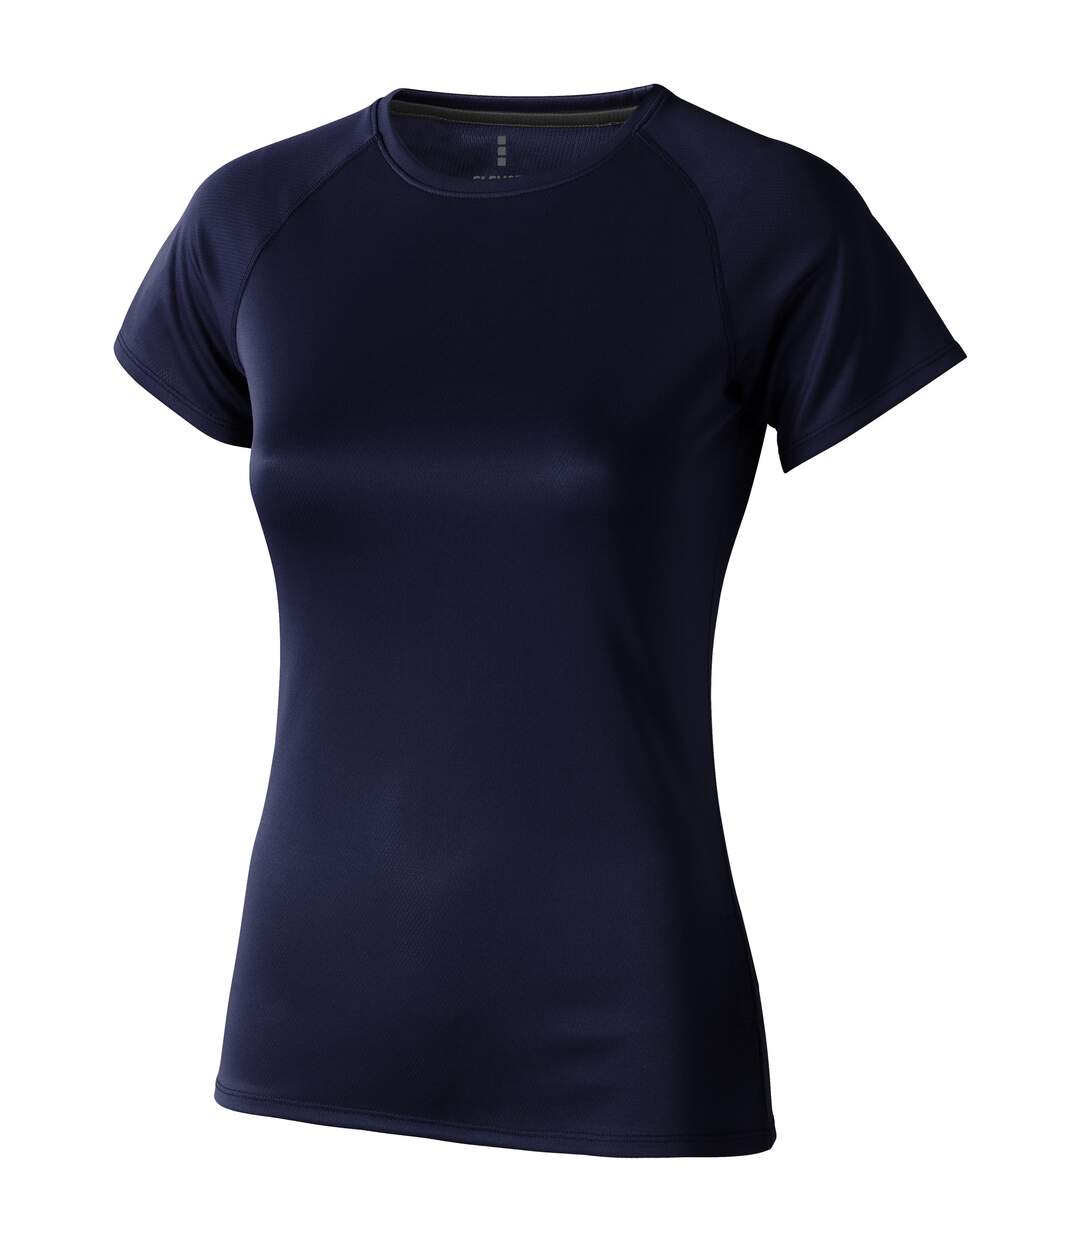 Elevate - T-shirt manches courtes Niagara - Femme (Bleu marine) - UTPF1878